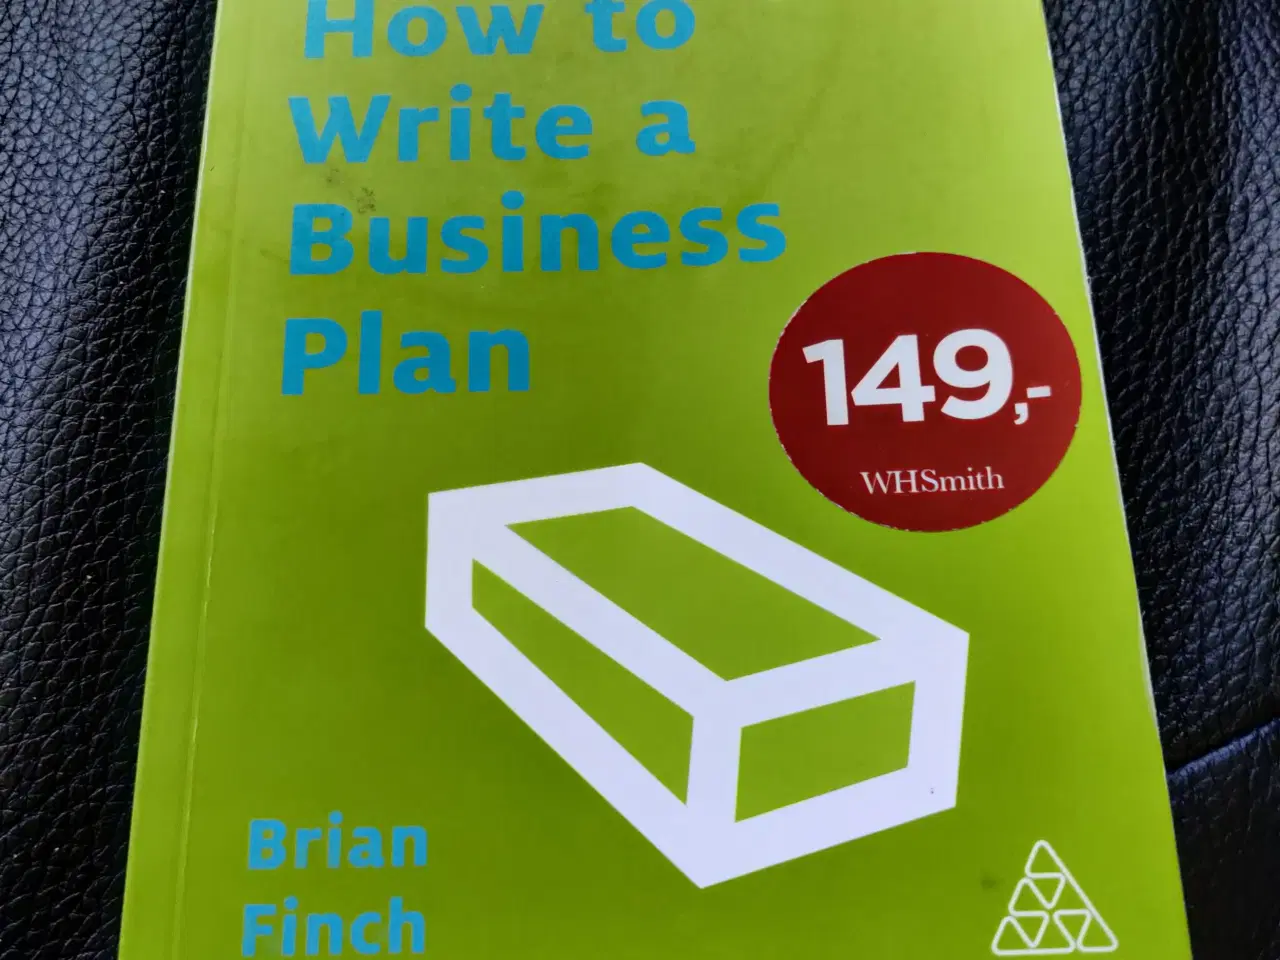 Billede 1 - Hos to write a business plan